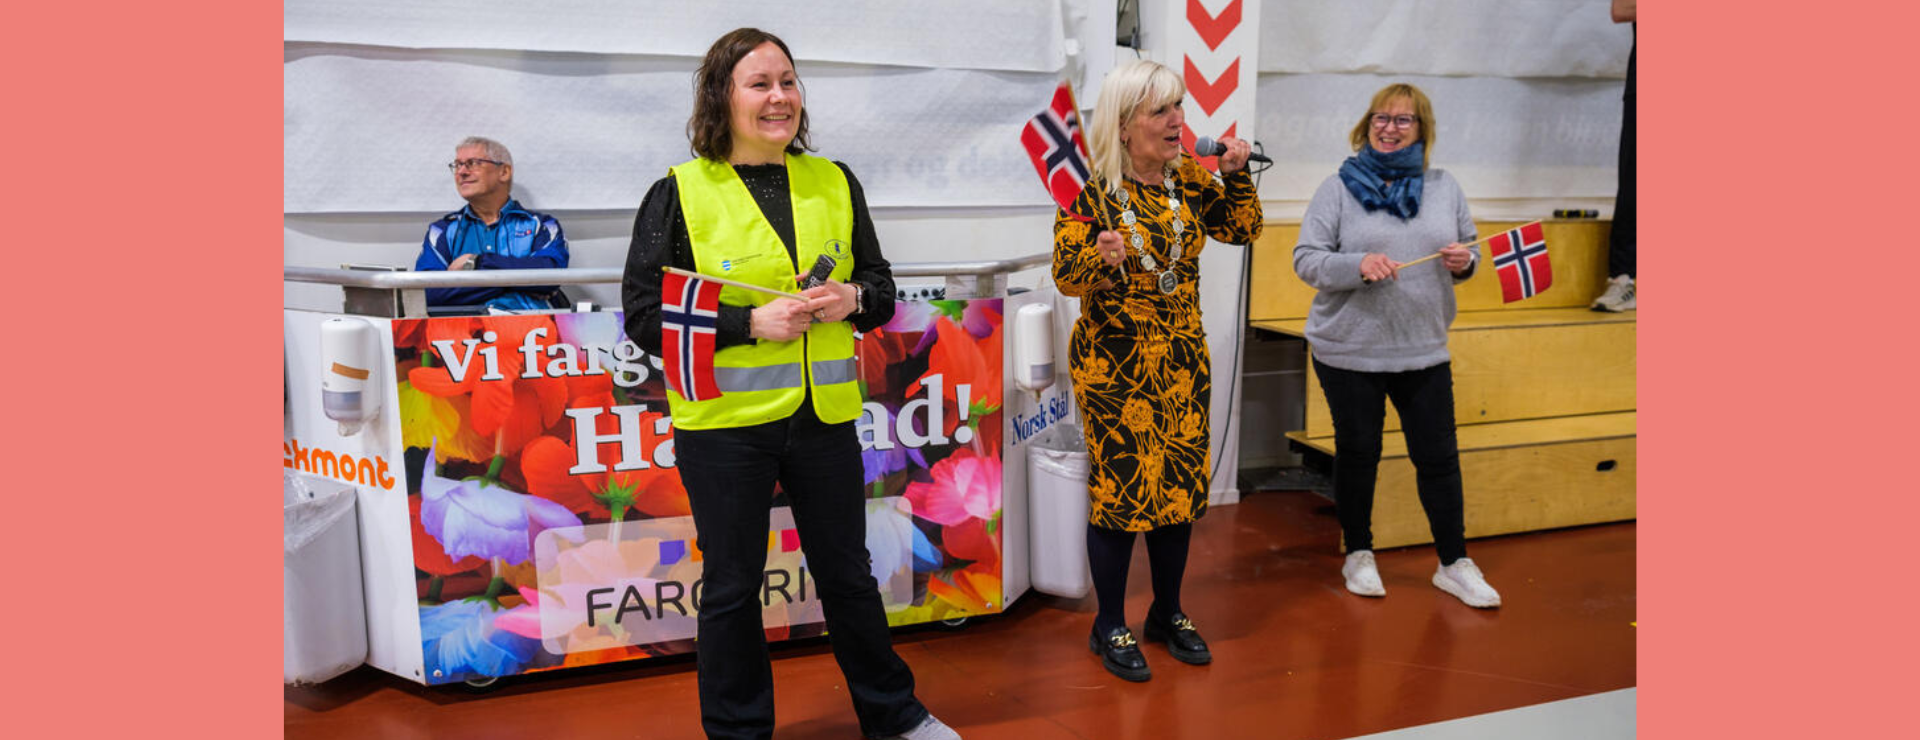 Dame med refleksvest og norsk flagg som står og ser utover salen.